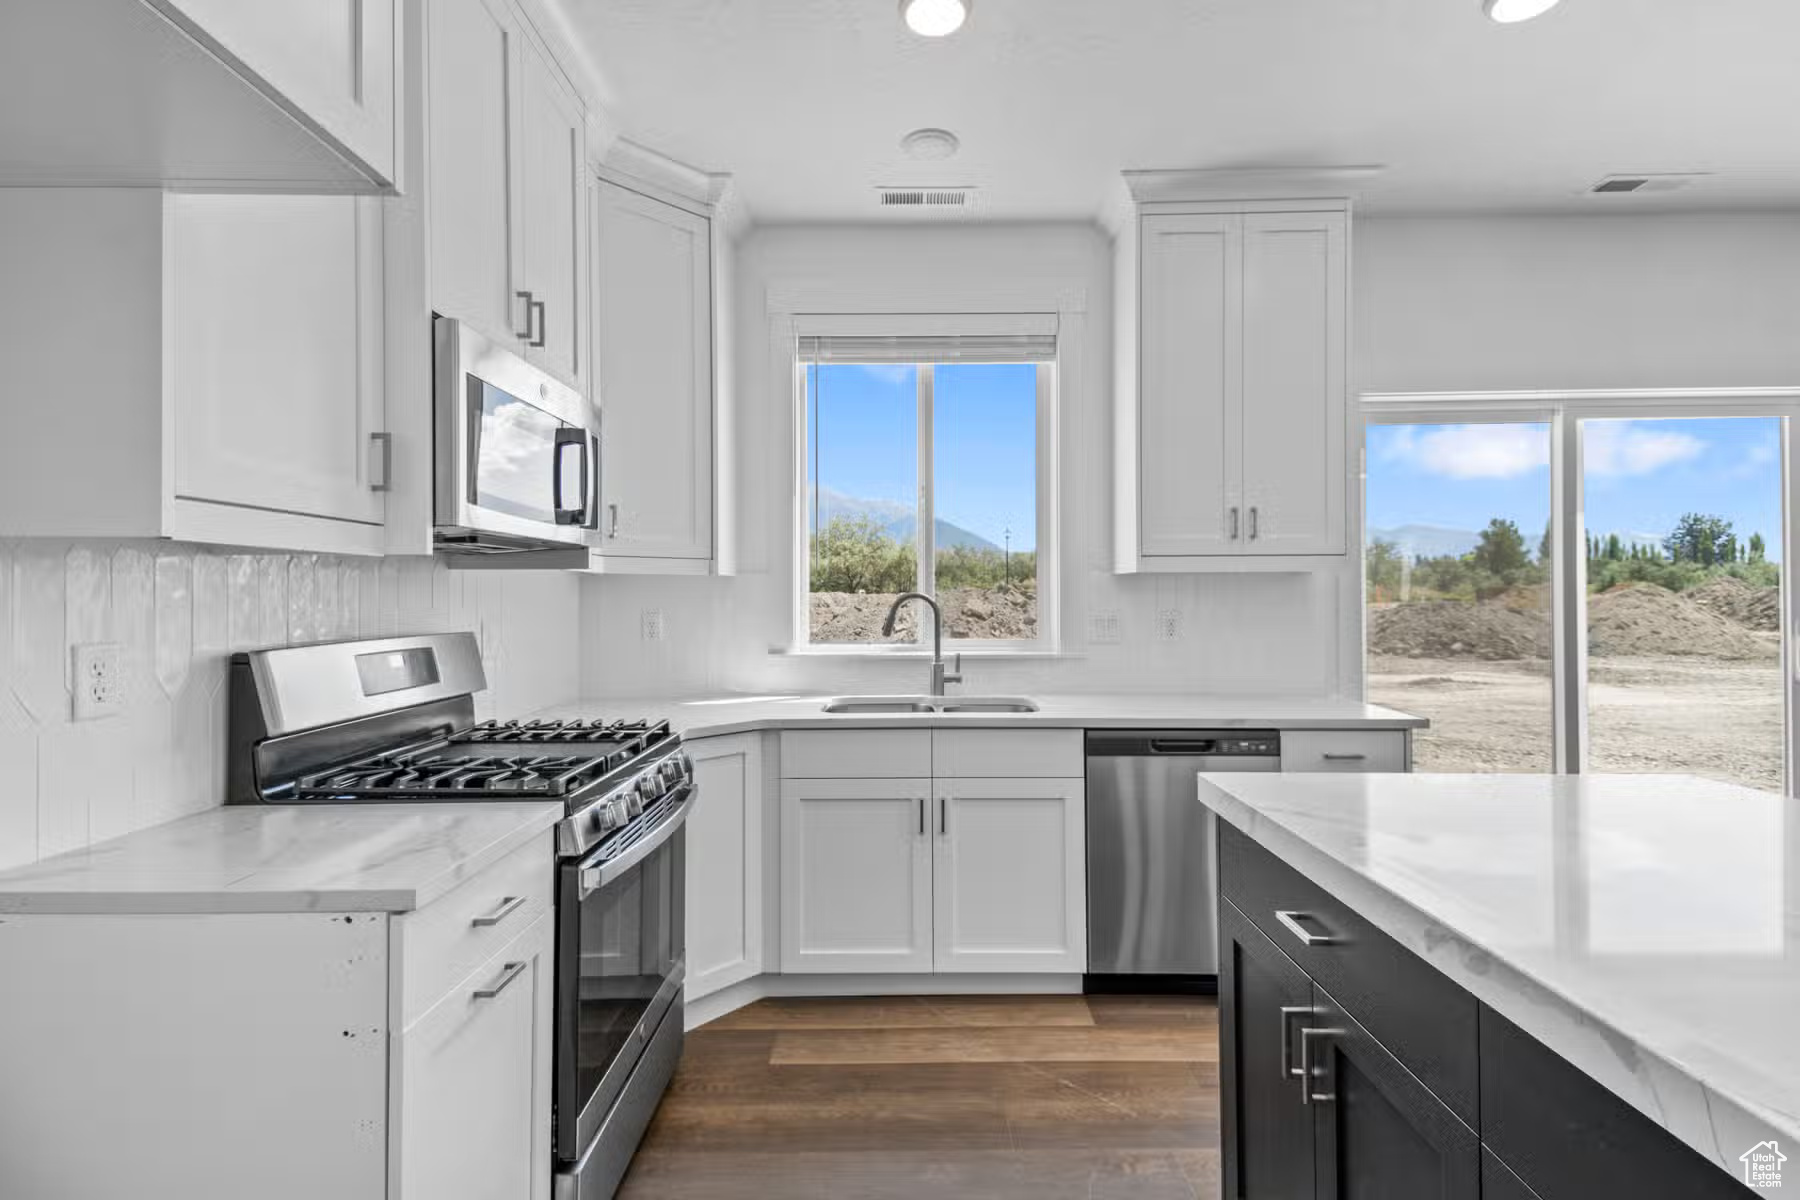 Kitchen featuring sink, plenty of natural light, stainless steel appliances, and dark hardwood / wood-style floors